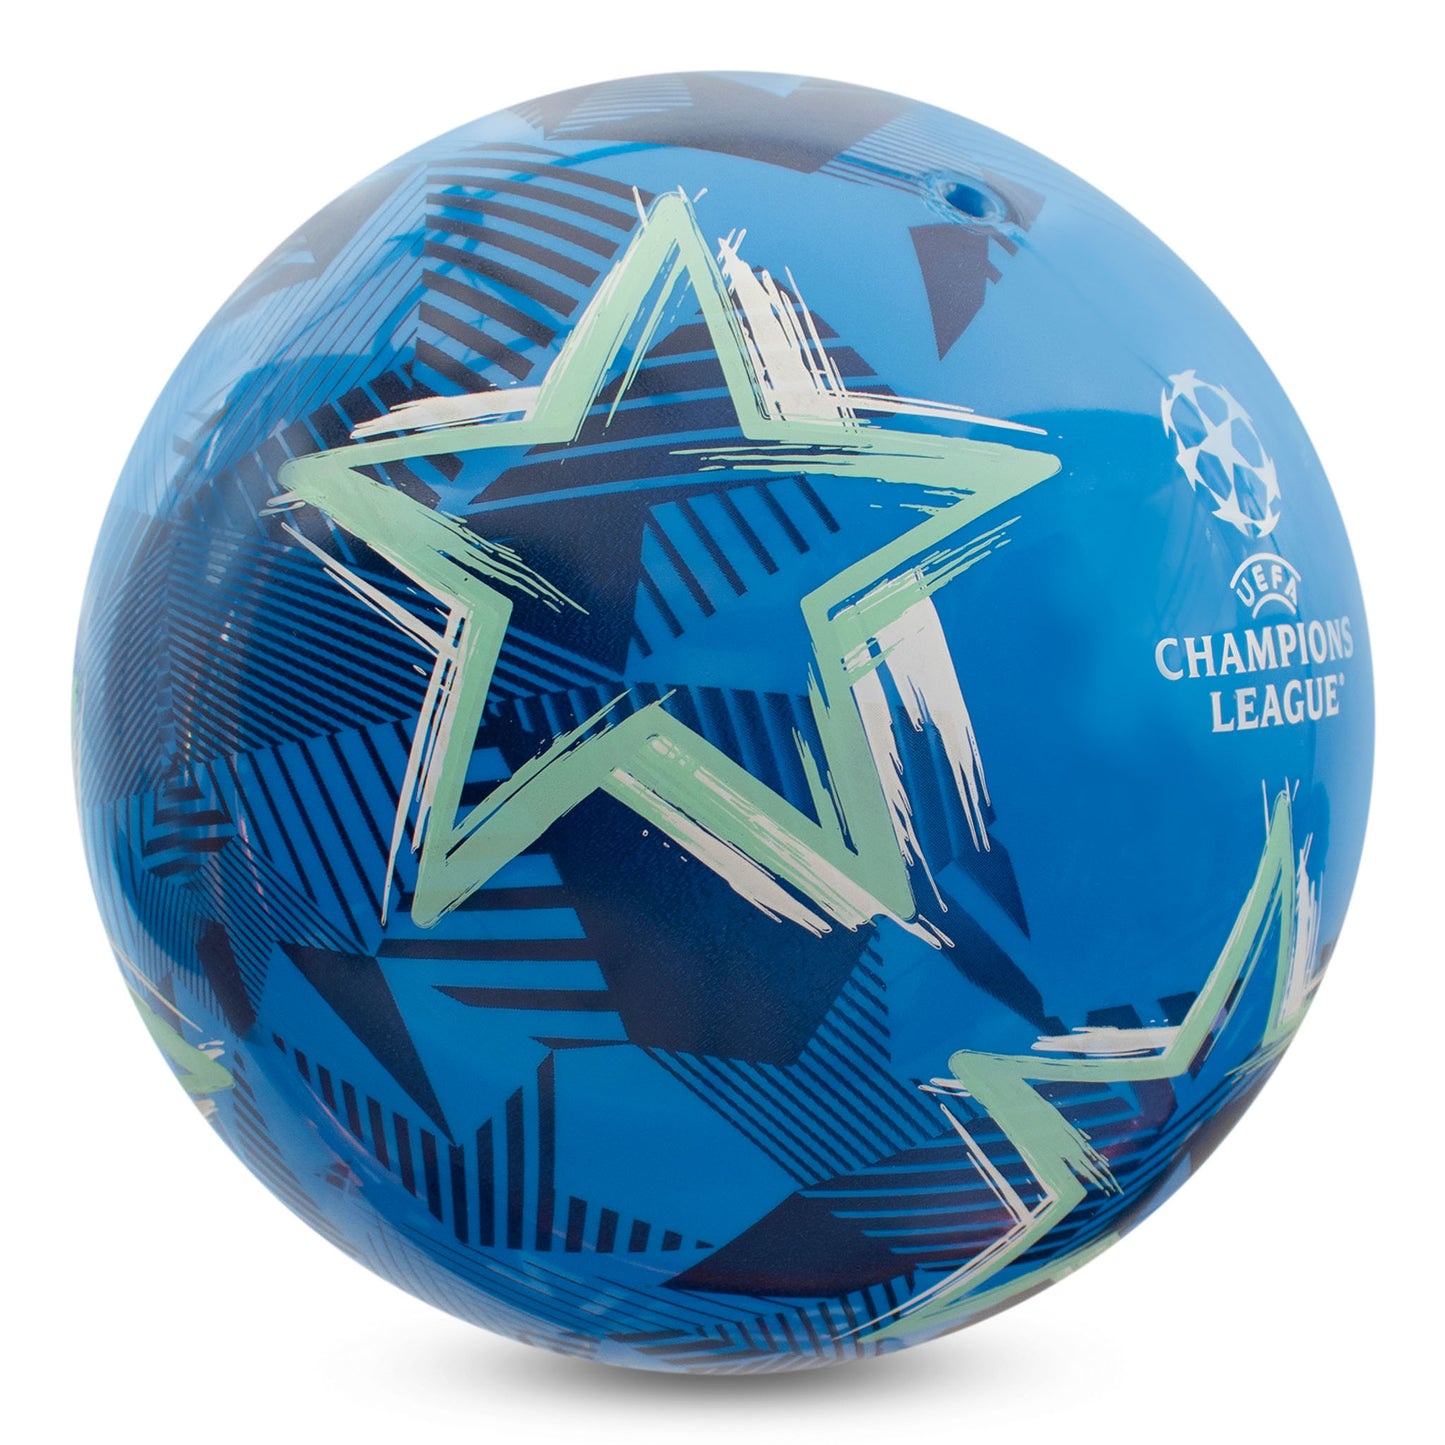 UEFA Champions League Flyaway Ball